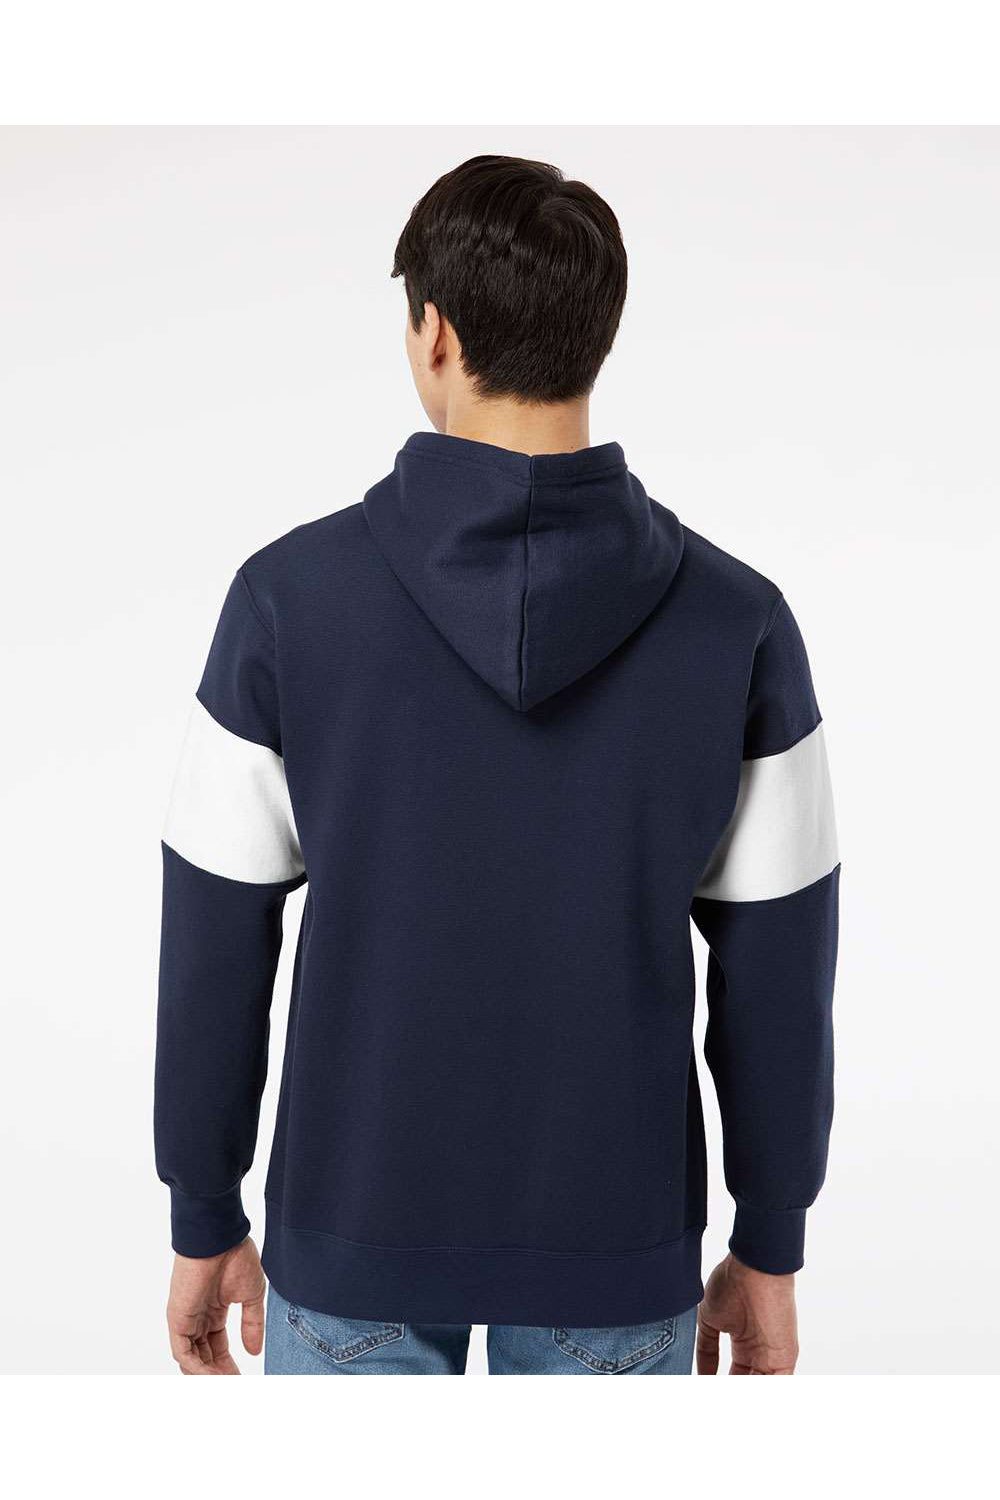 MV Sport 22709 Mens Classic Fleece Colorblocked Hooded Sweatshirt Hoodie Navy Blue Model Back